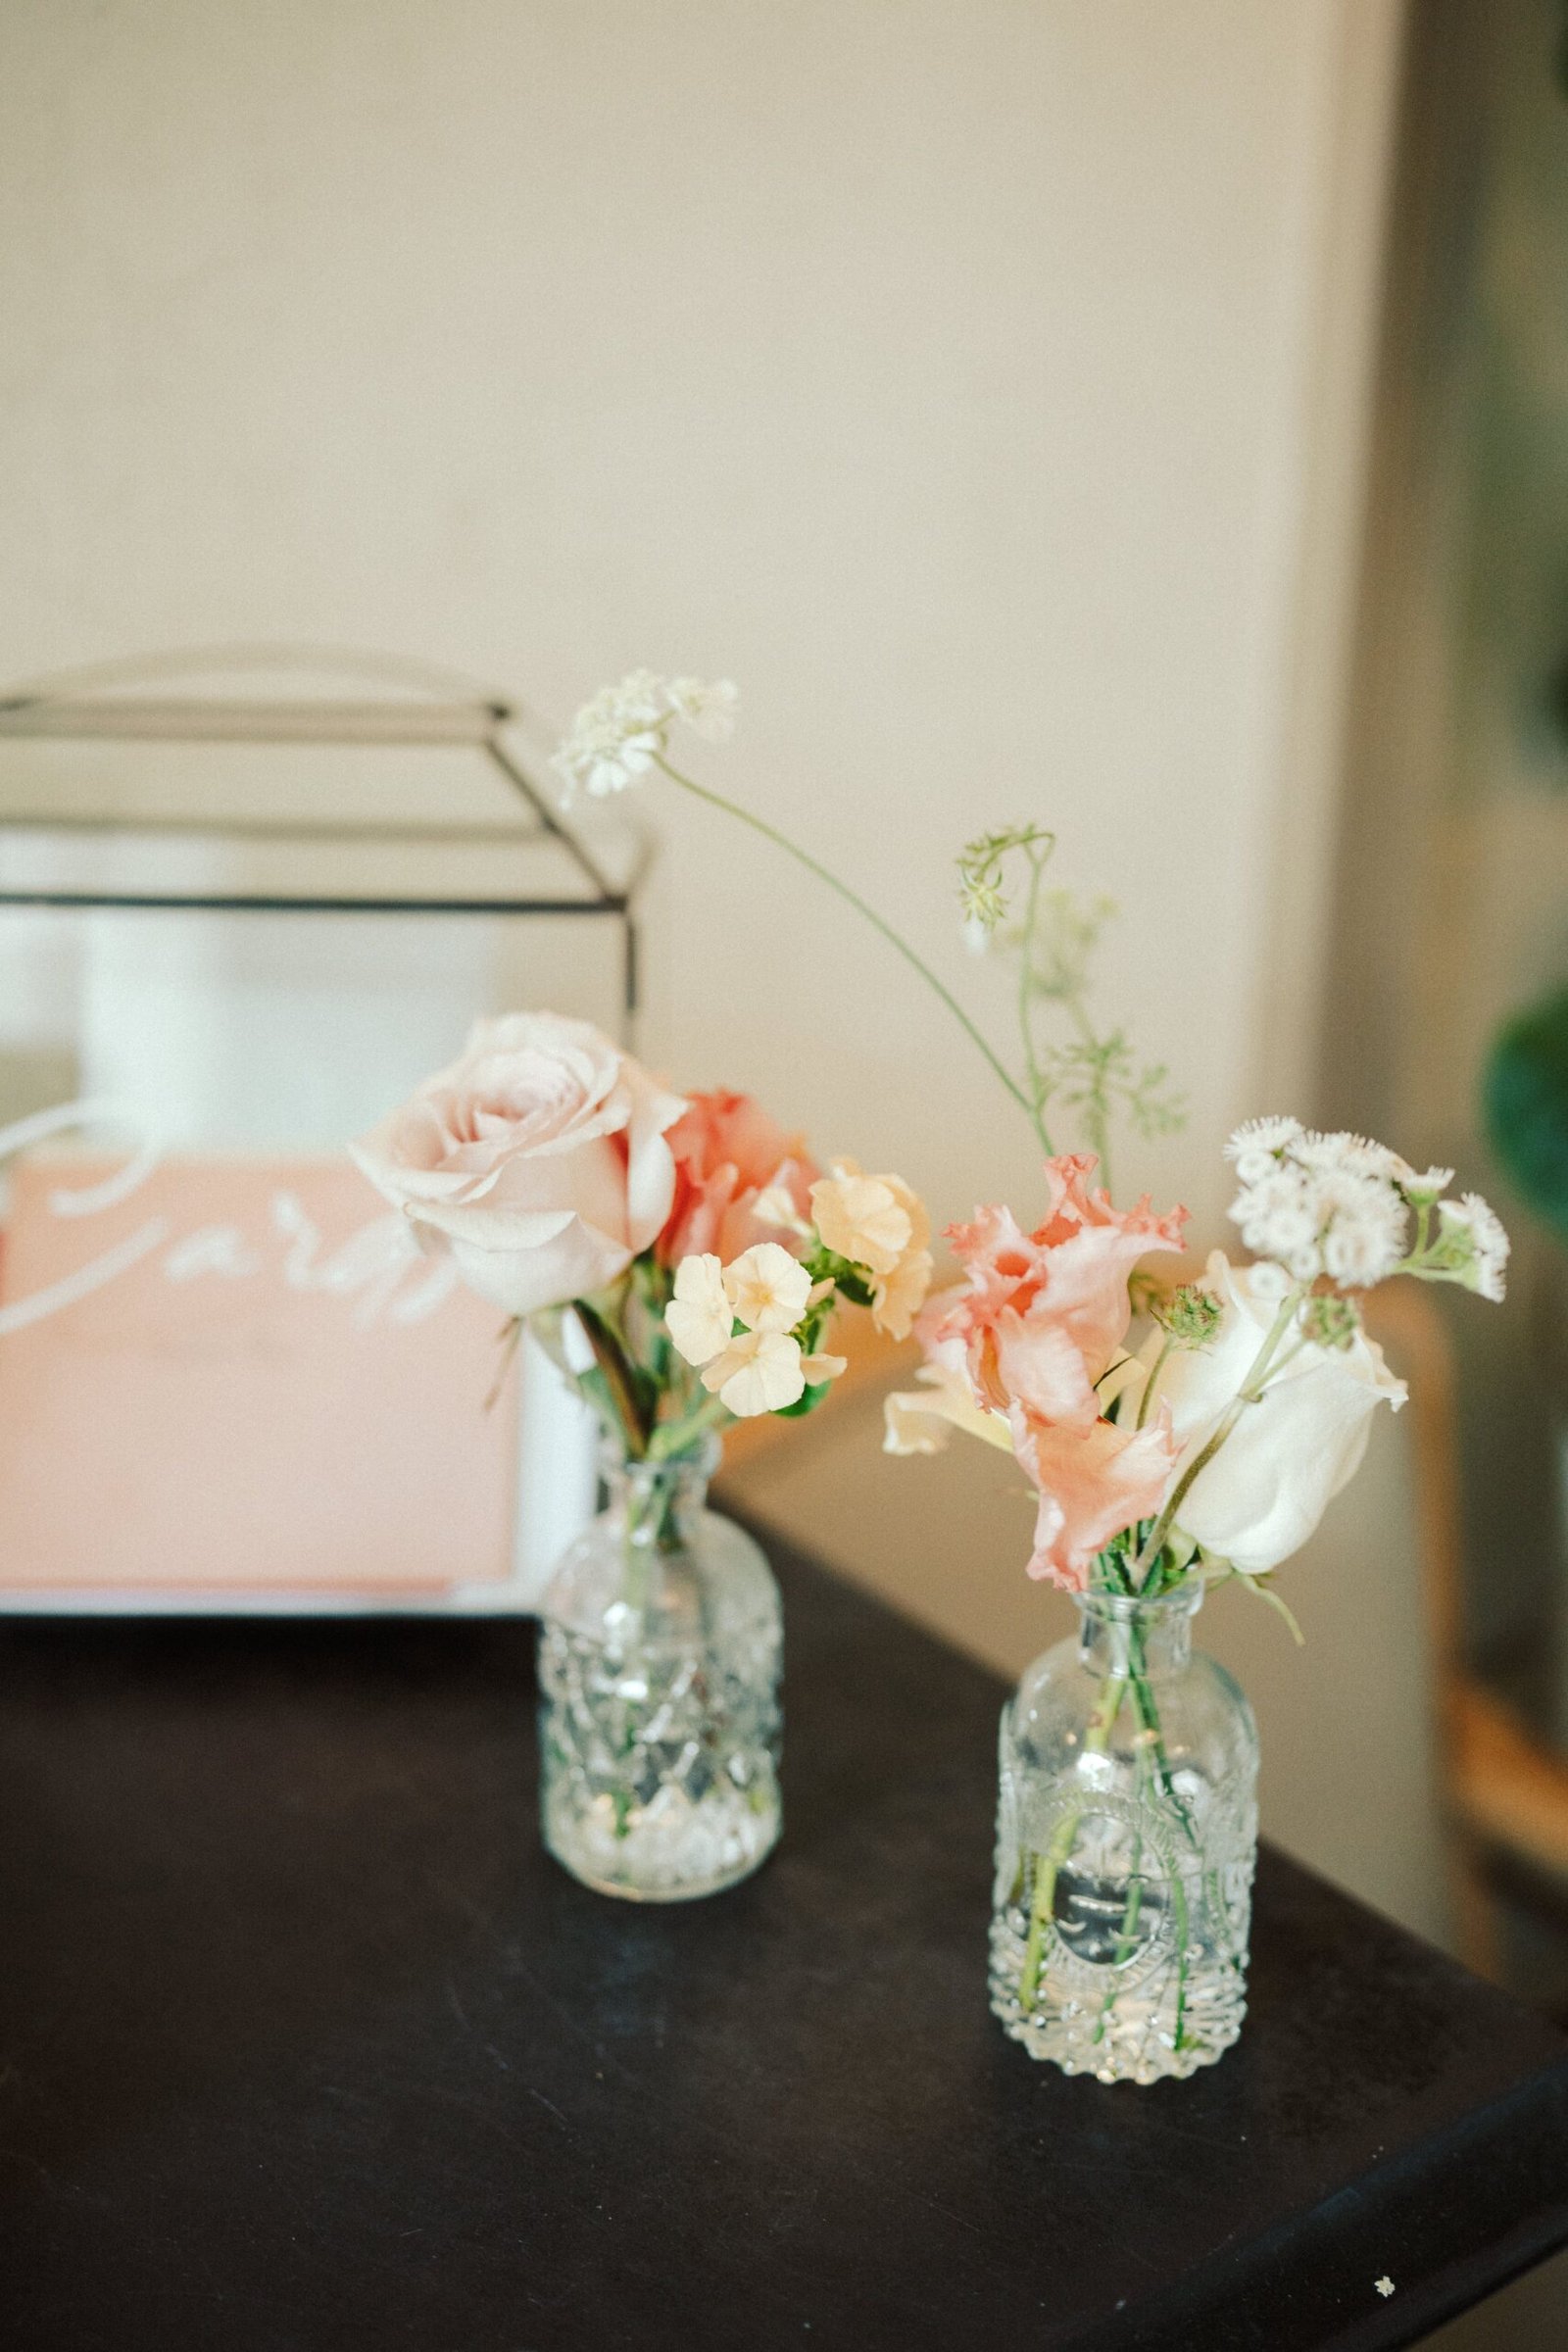 Clear glass stem vases